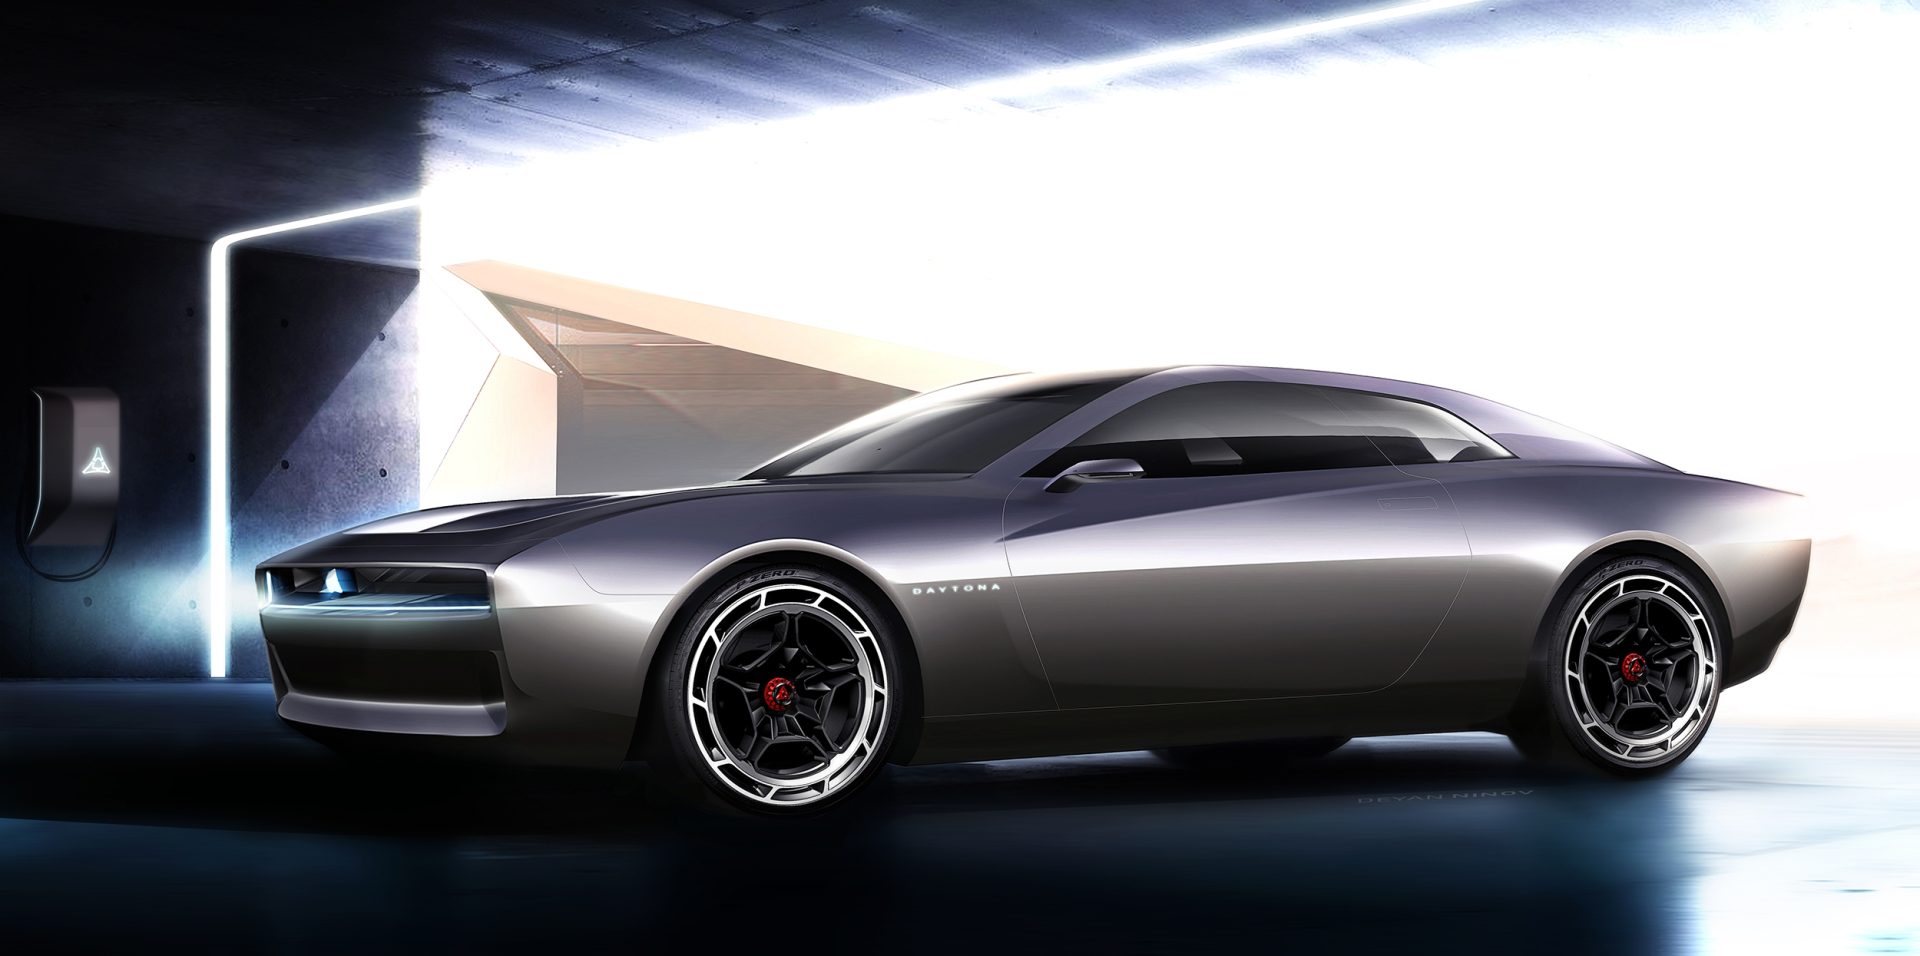 cn022 022dg1sv9froekh7vr2uhiau9fbsk56 62feb312b0a23 63034bb4703af Το Dodge Charger Daytona SRT δίνει μια πρώτη γεύση για το ηλεκτρικό μέλλον